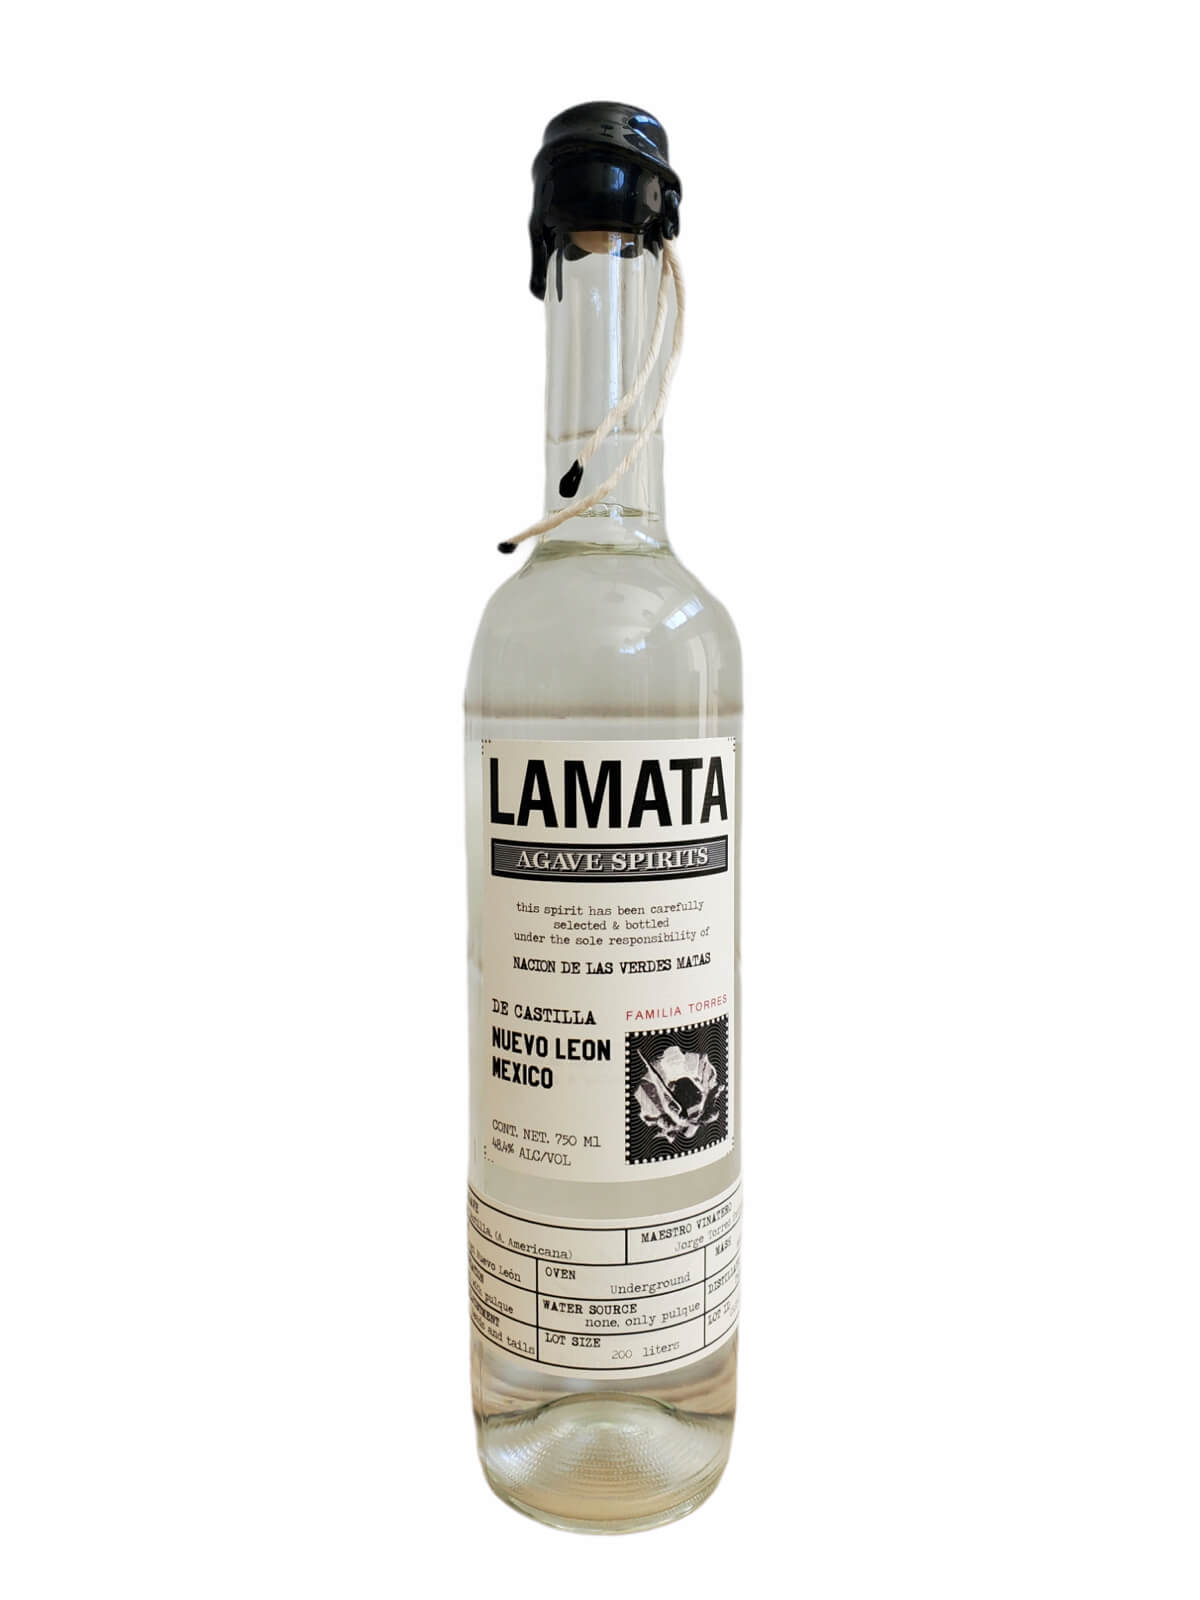 Lamata de Castilla Nuevo Leon bottle